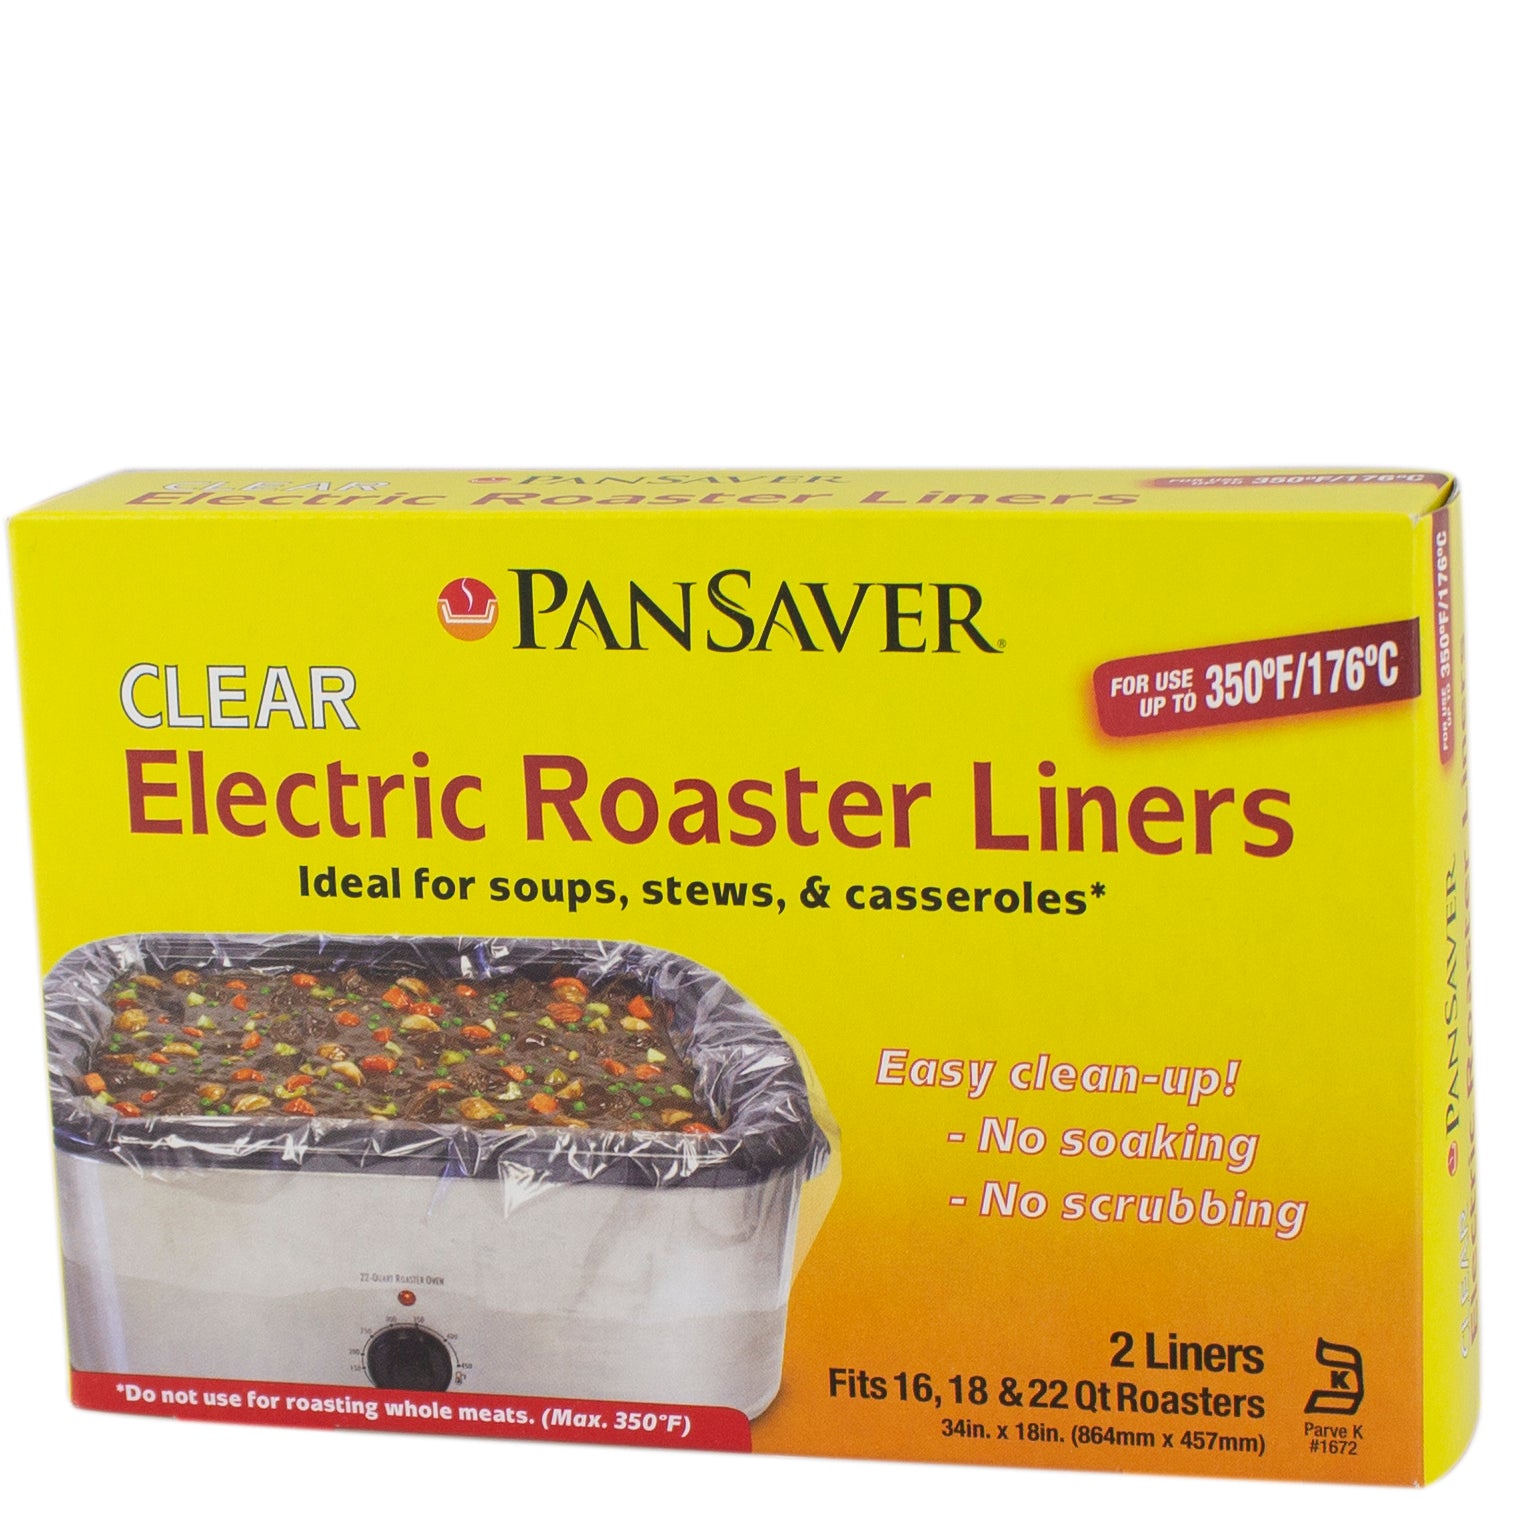 Pansaver Professional Products - Pansaver